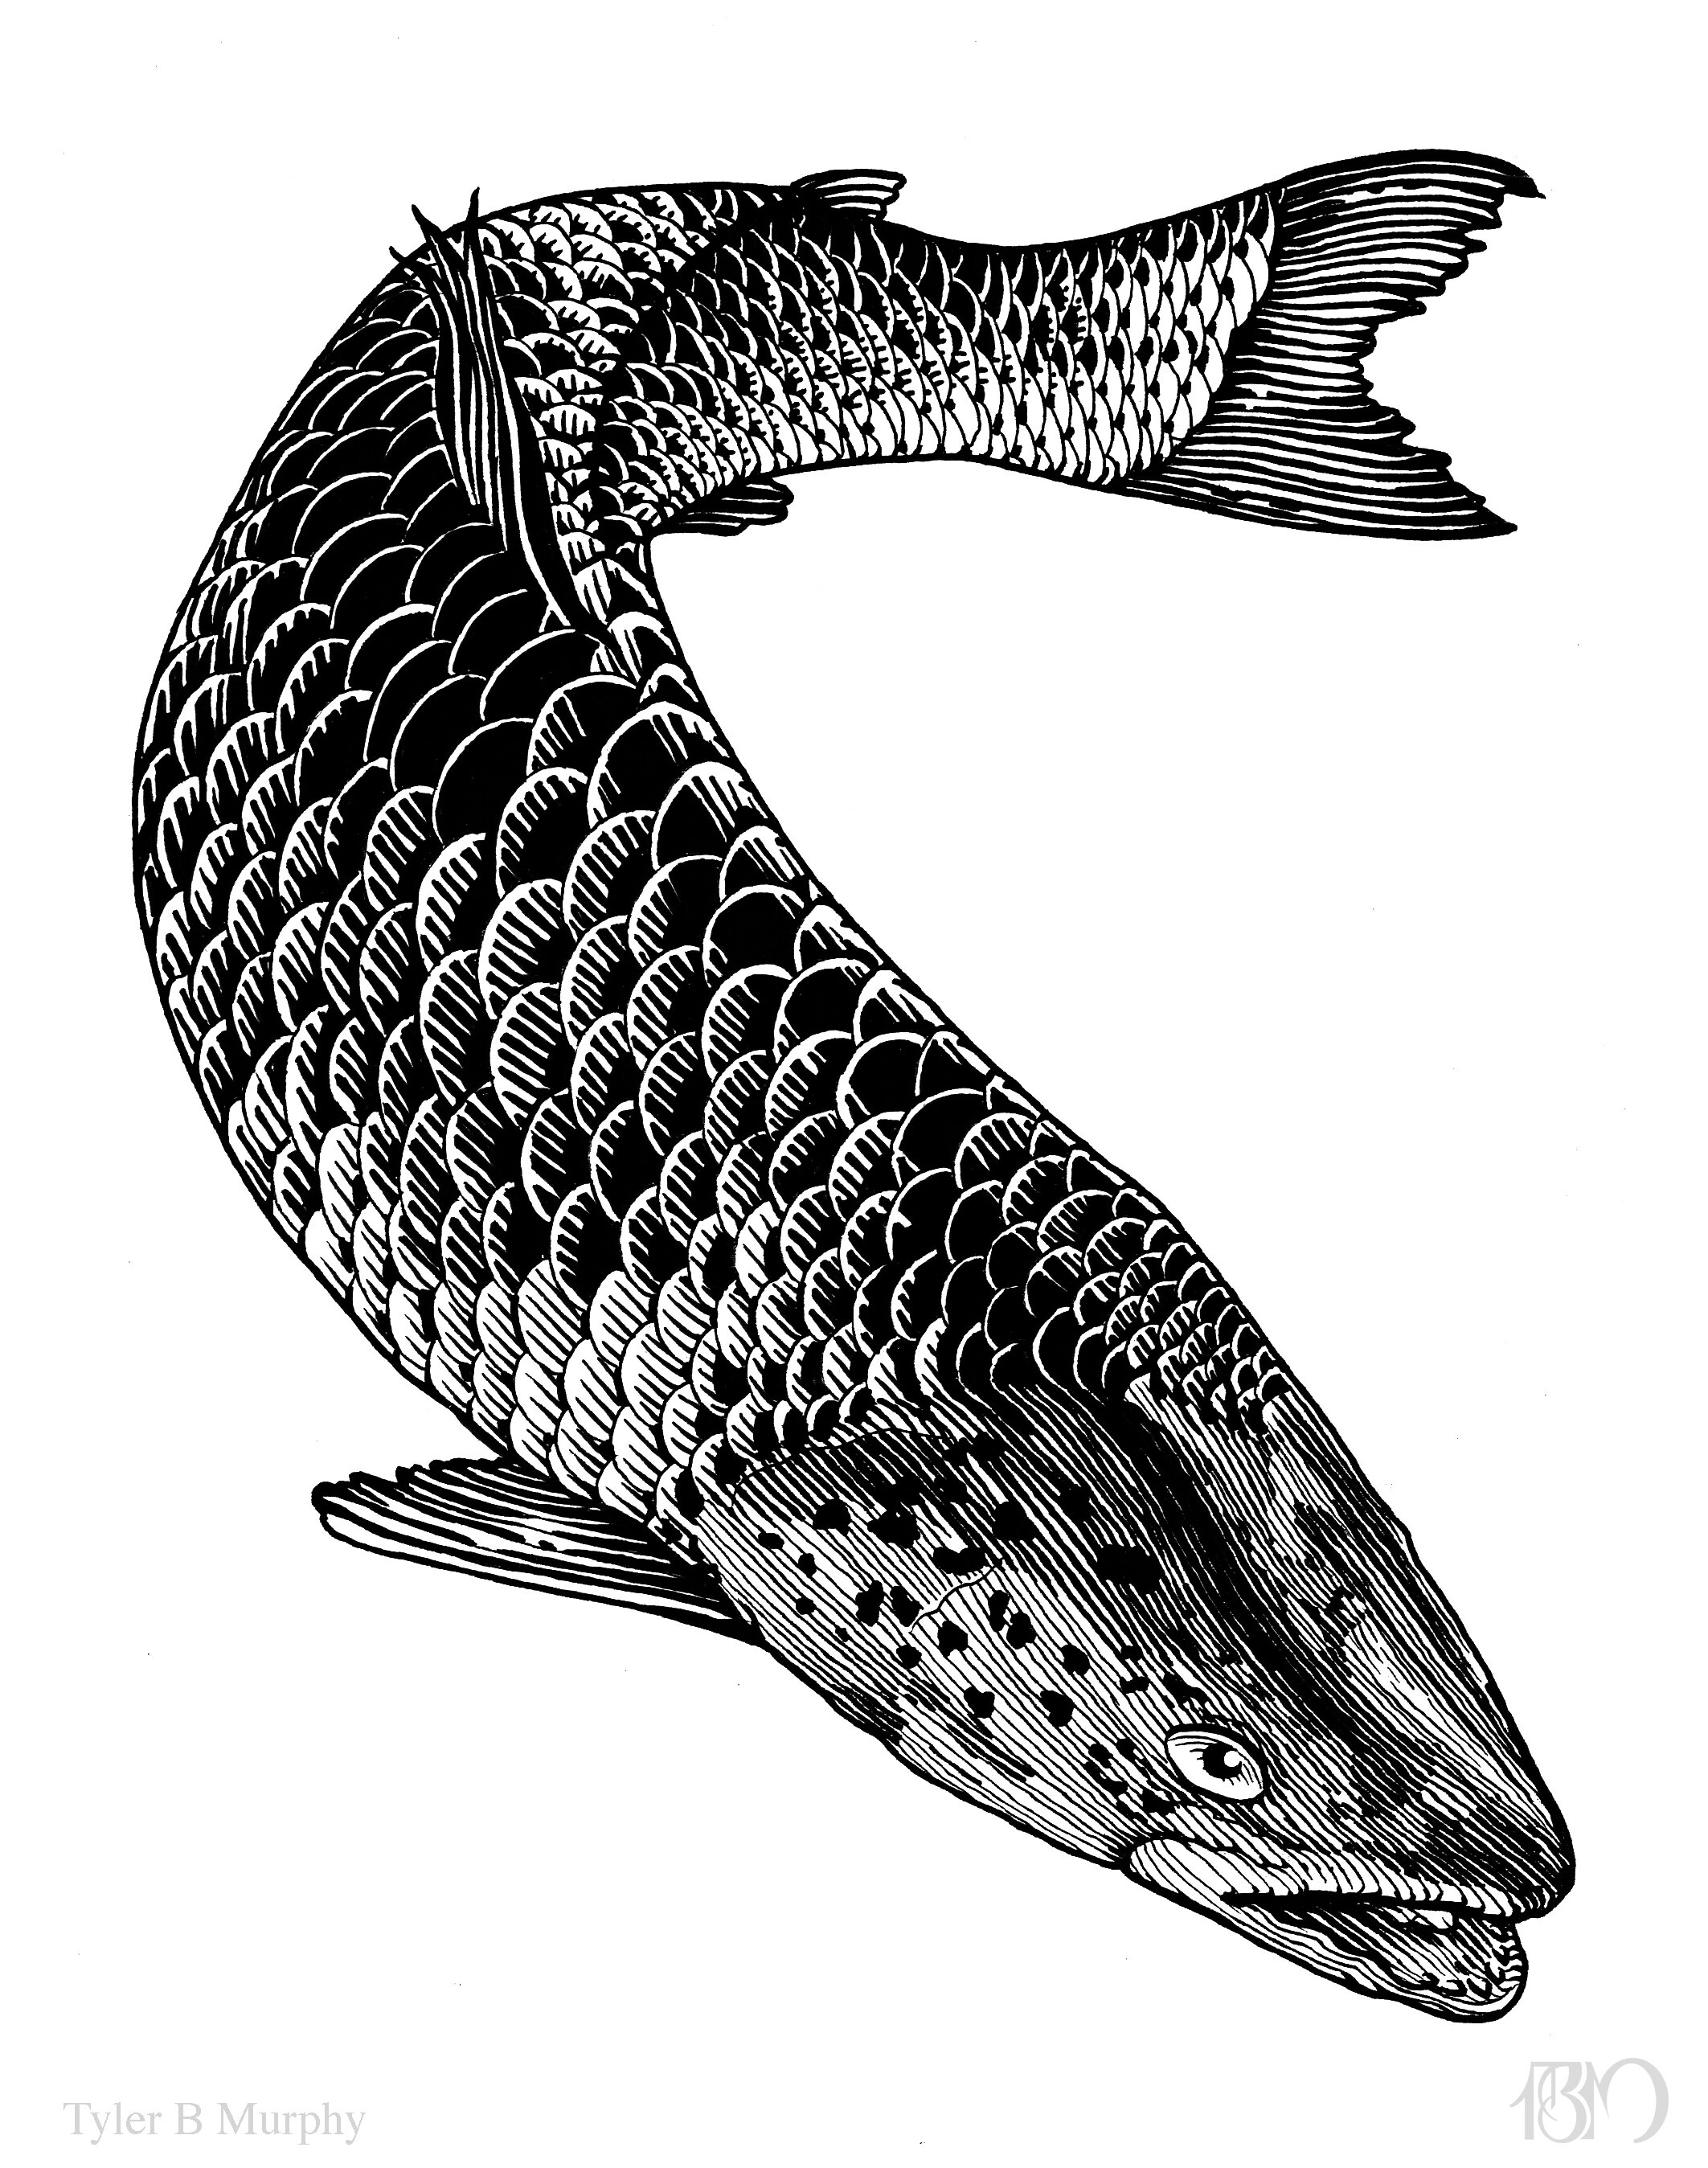 3 -Fish illustration Tyler B Murphy copy.jpg